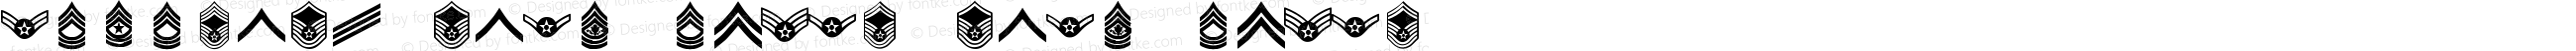 military-rank-icons